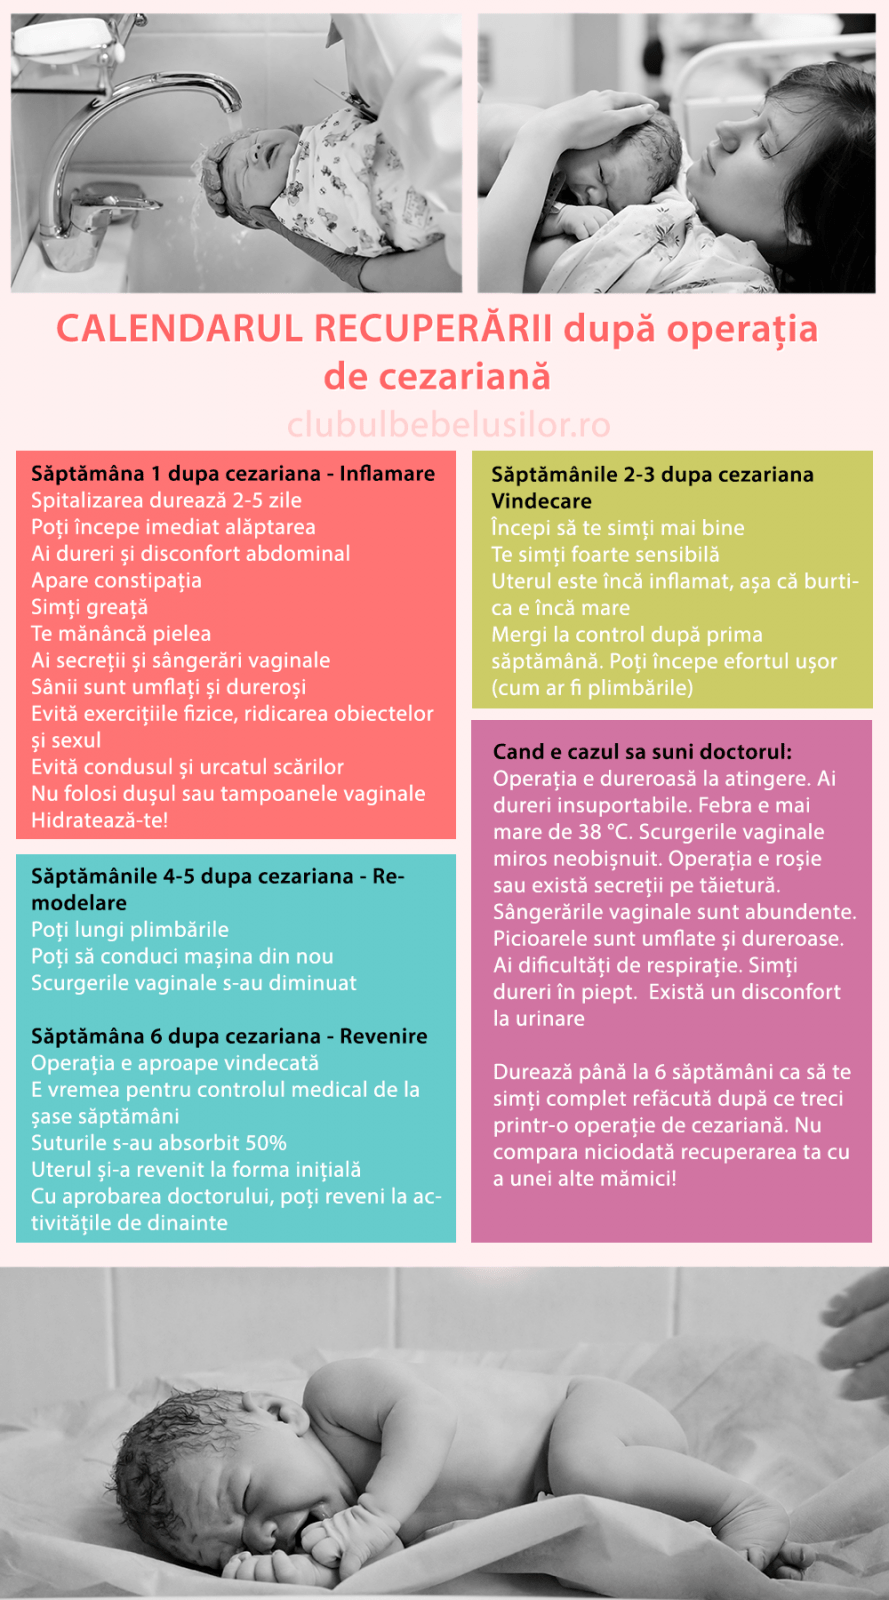 Cezariana - Medic Chat